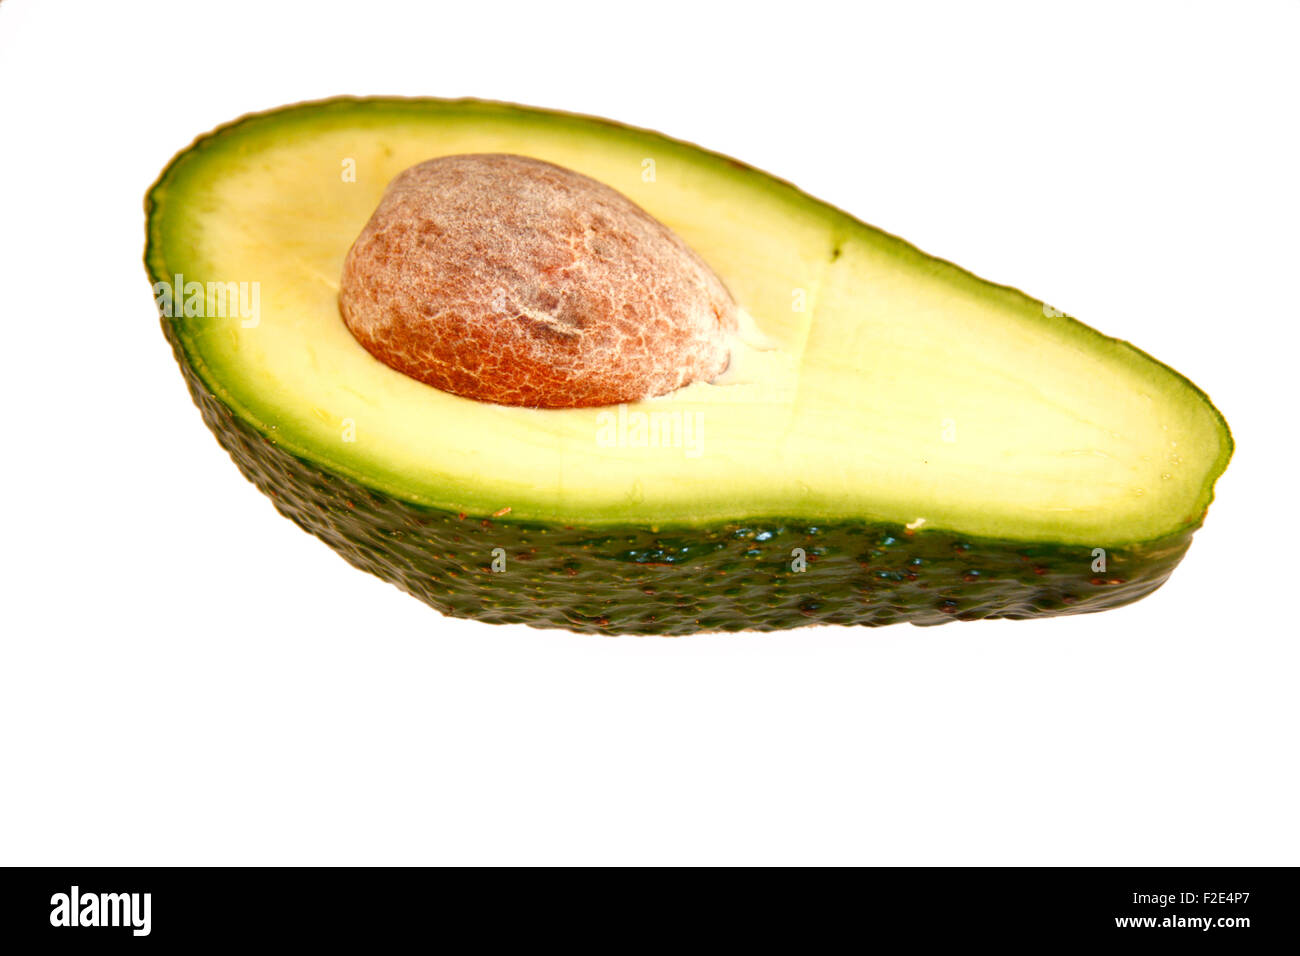 Avocado - Symbolbild Nahrungsmittel. Stock Photo